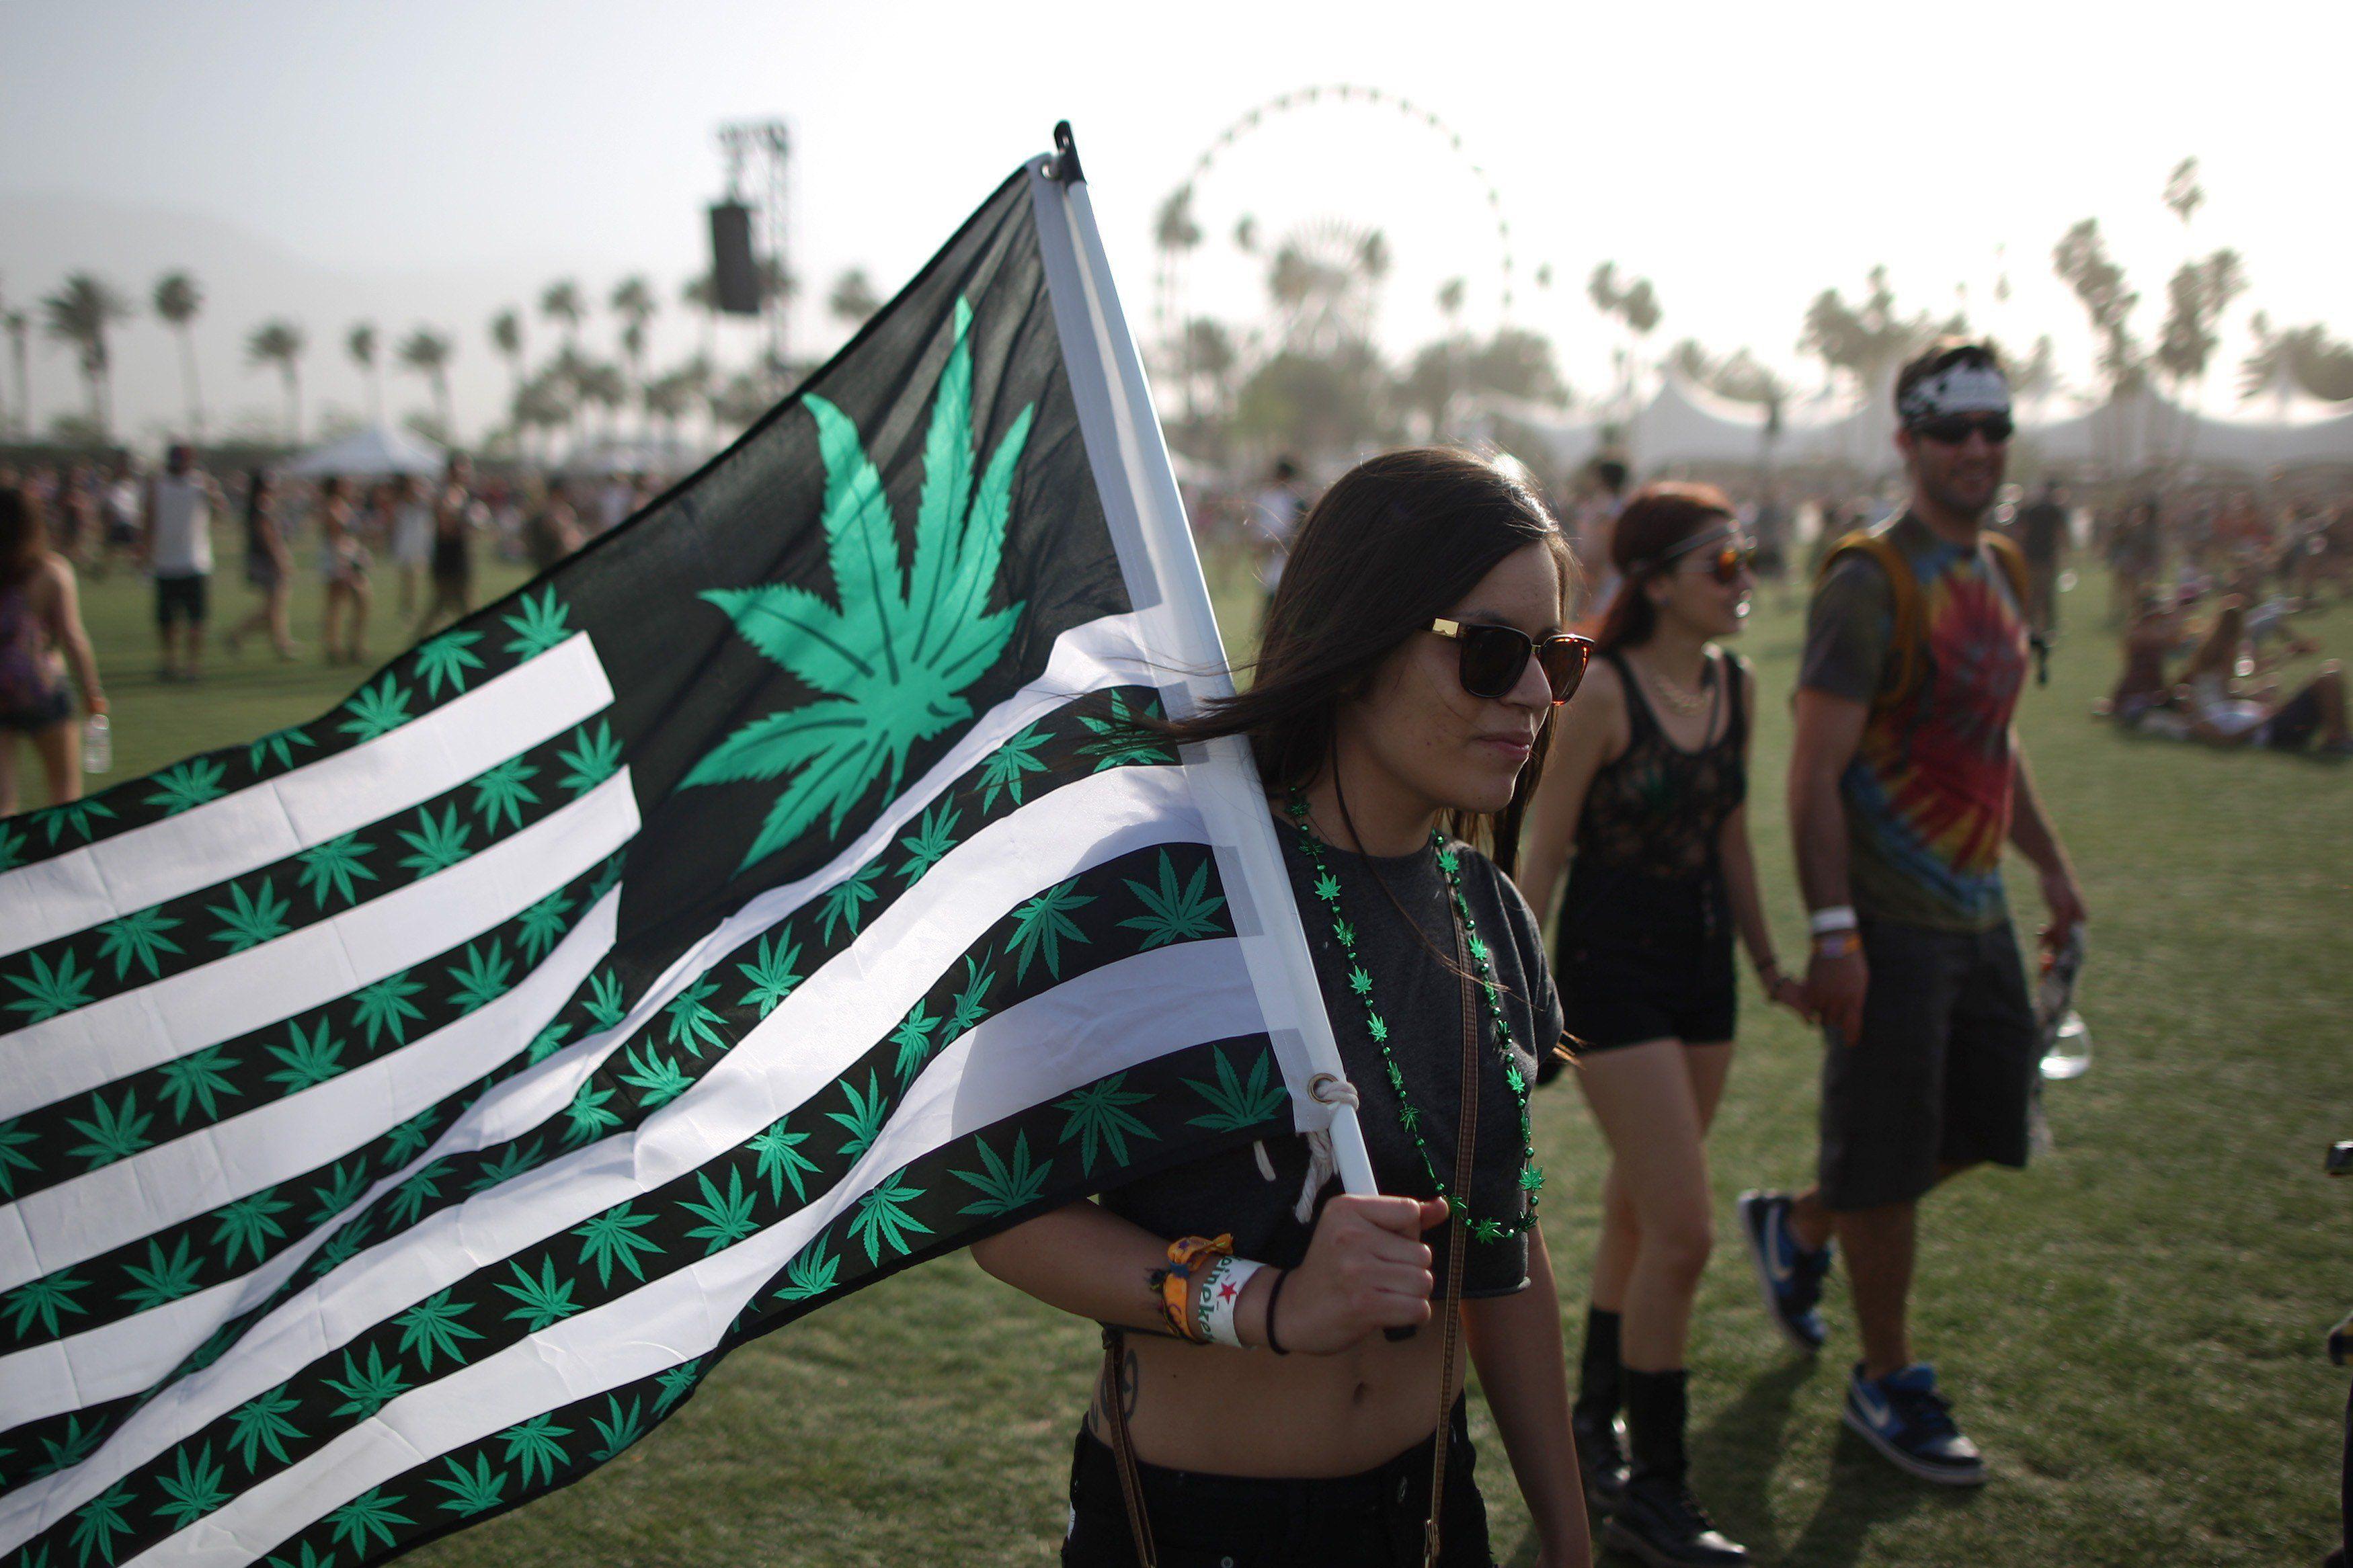 Marijuana Use Will Still Be Illegal at Coachella Despite